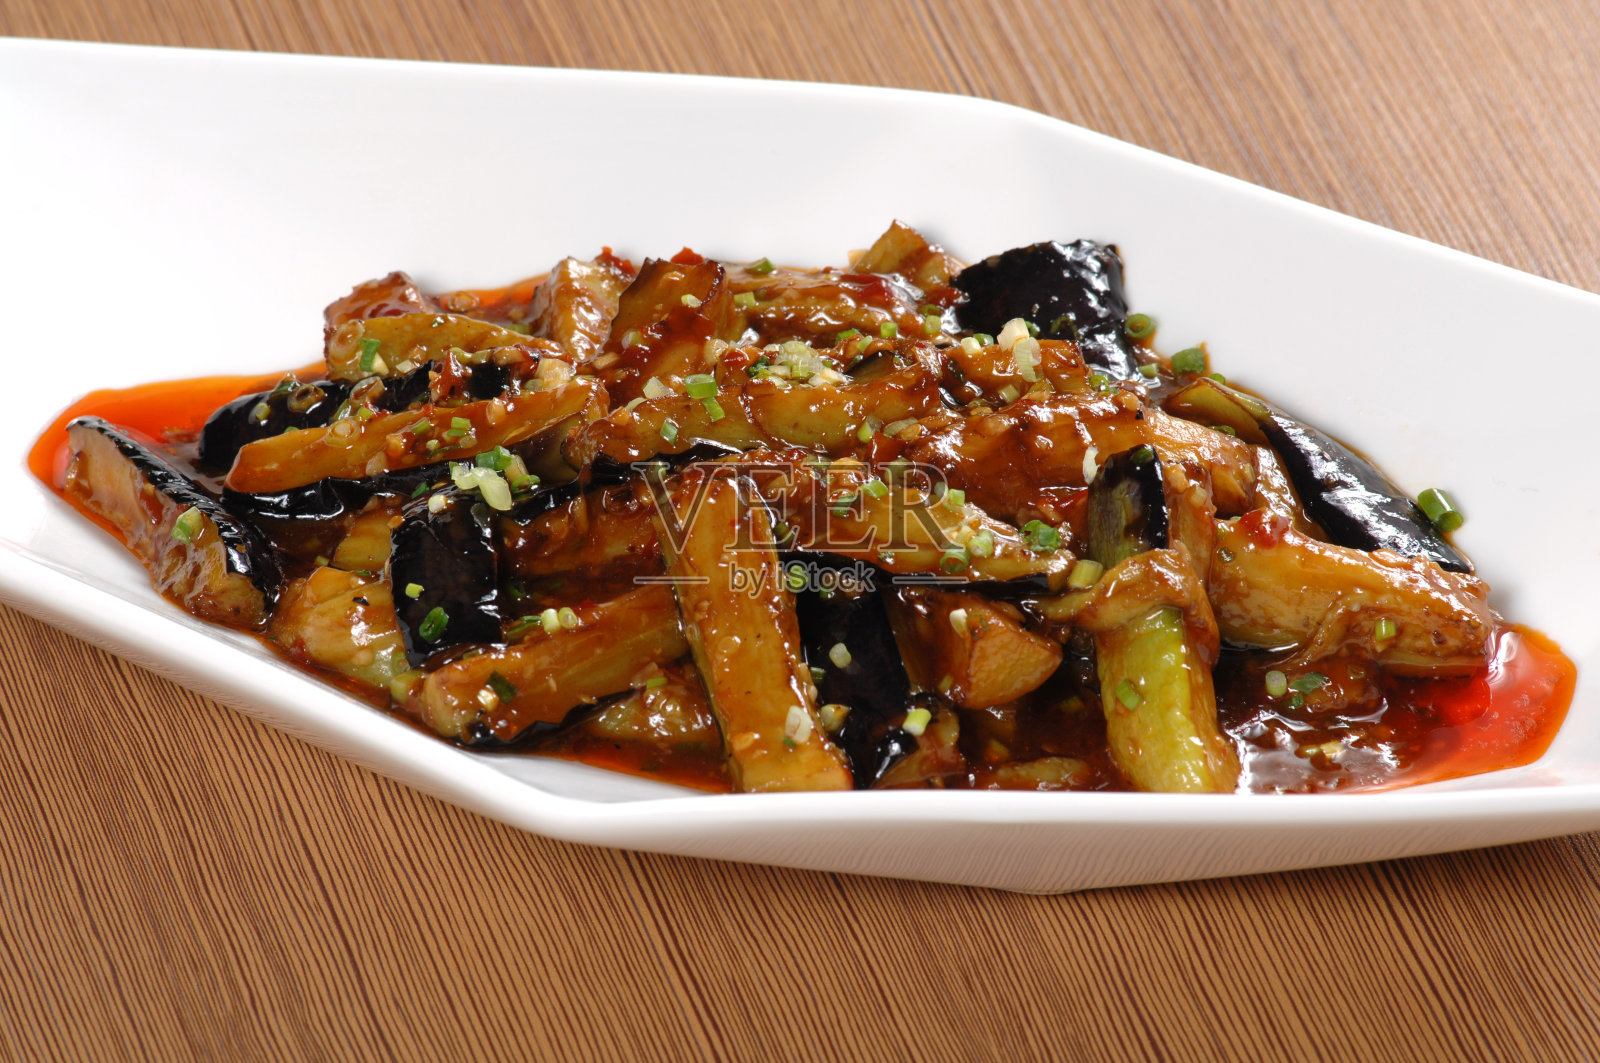 Fish flavored eggplant with Minced Pork in Garlic Sauce (鱼香茄子)照片摄影图片